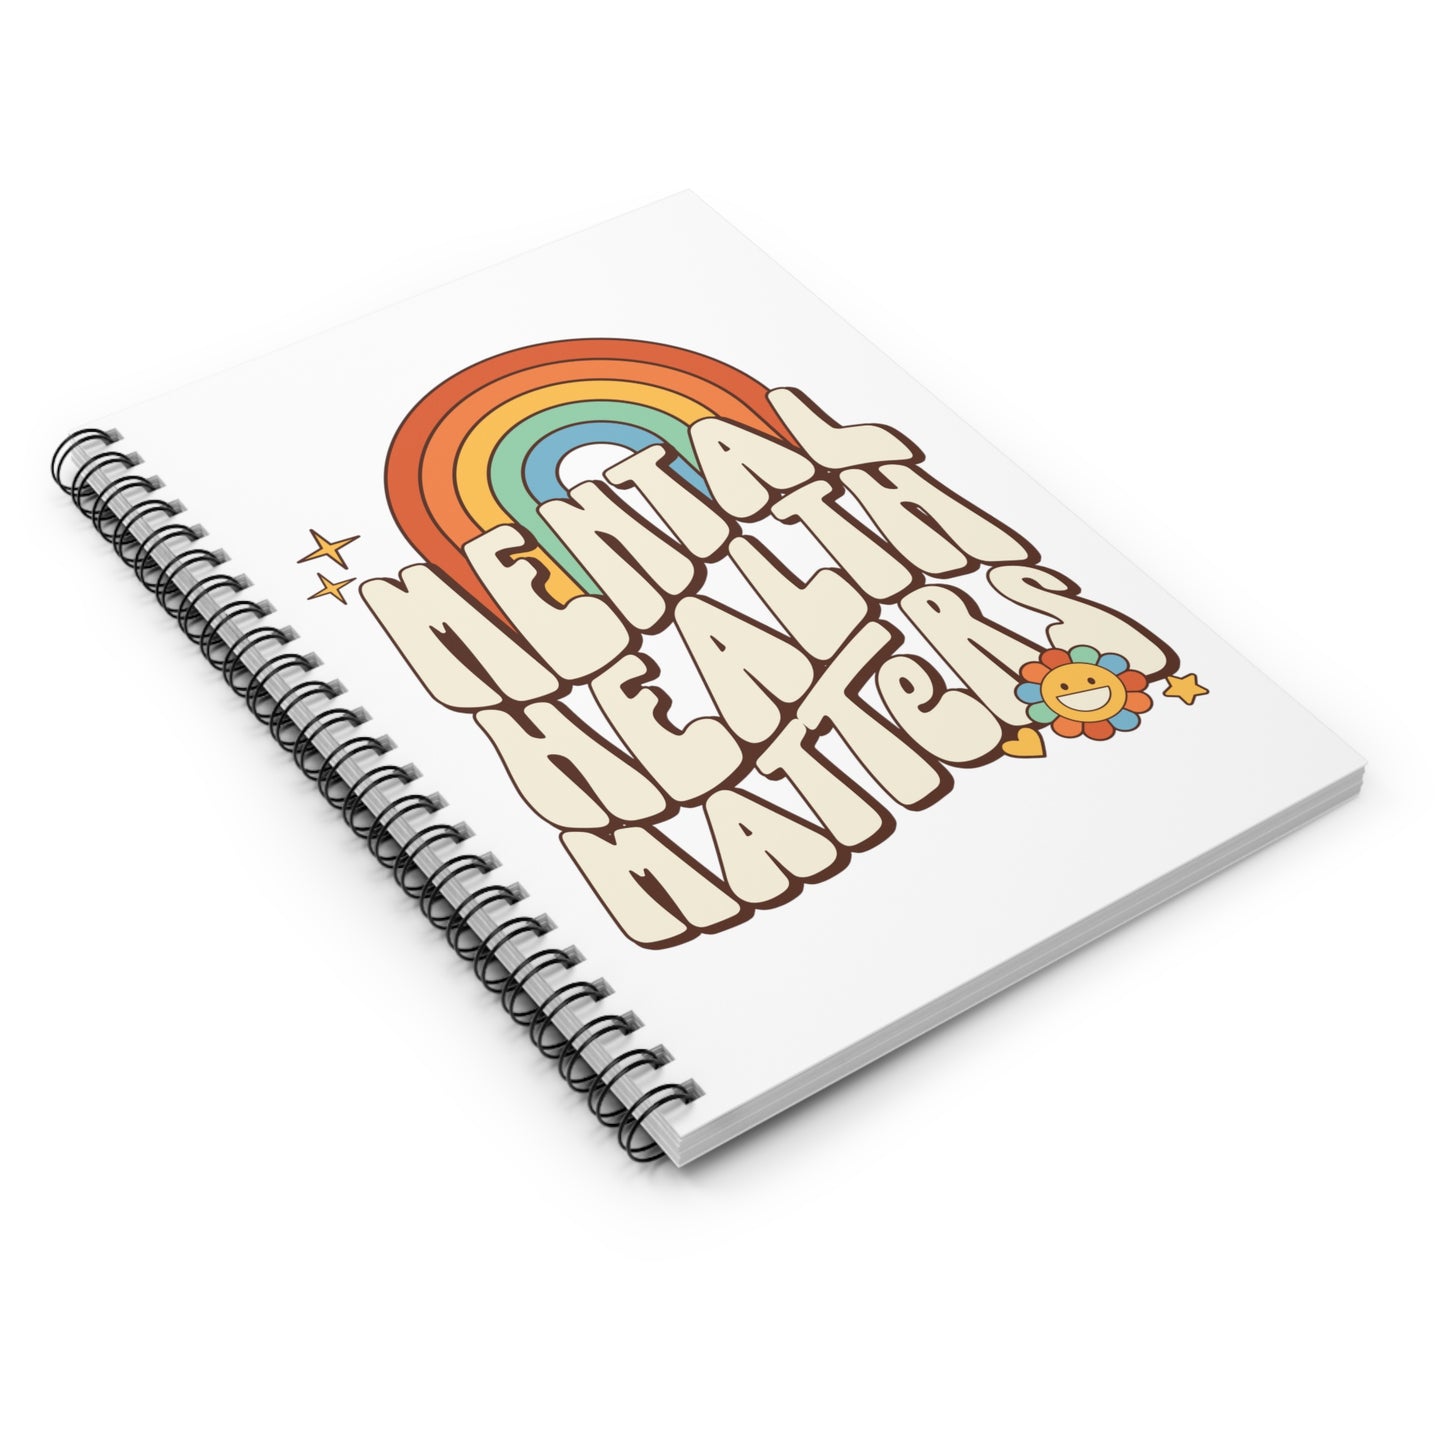 Spiral Notebook - Ruled Line, mental health